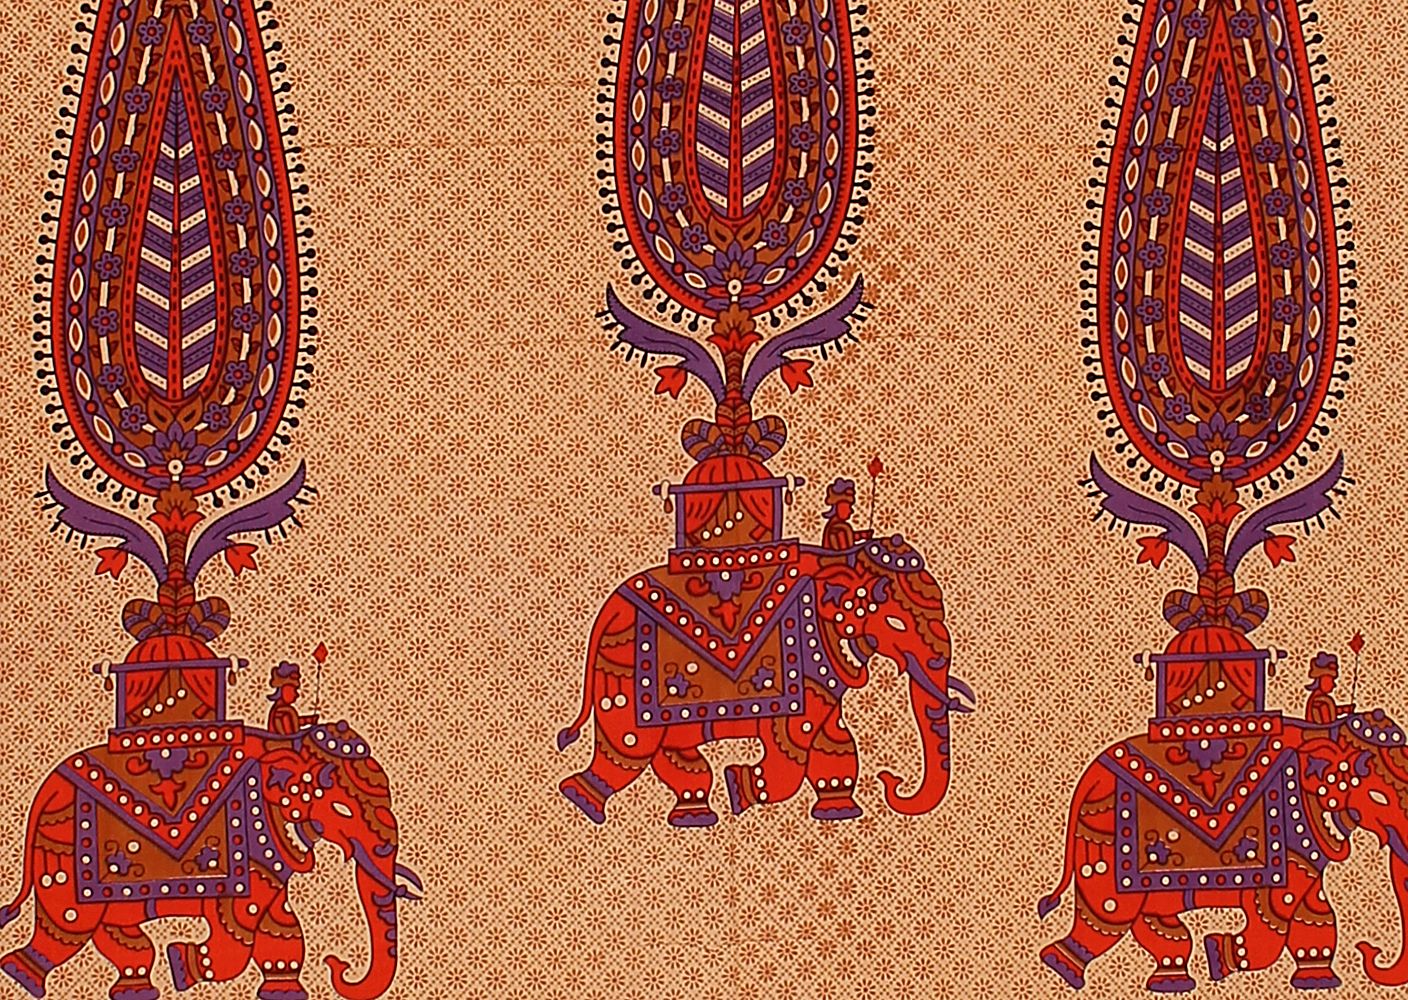 Orange Border Leaf With Elephant Print Fine Cotton Double Bed Sheet